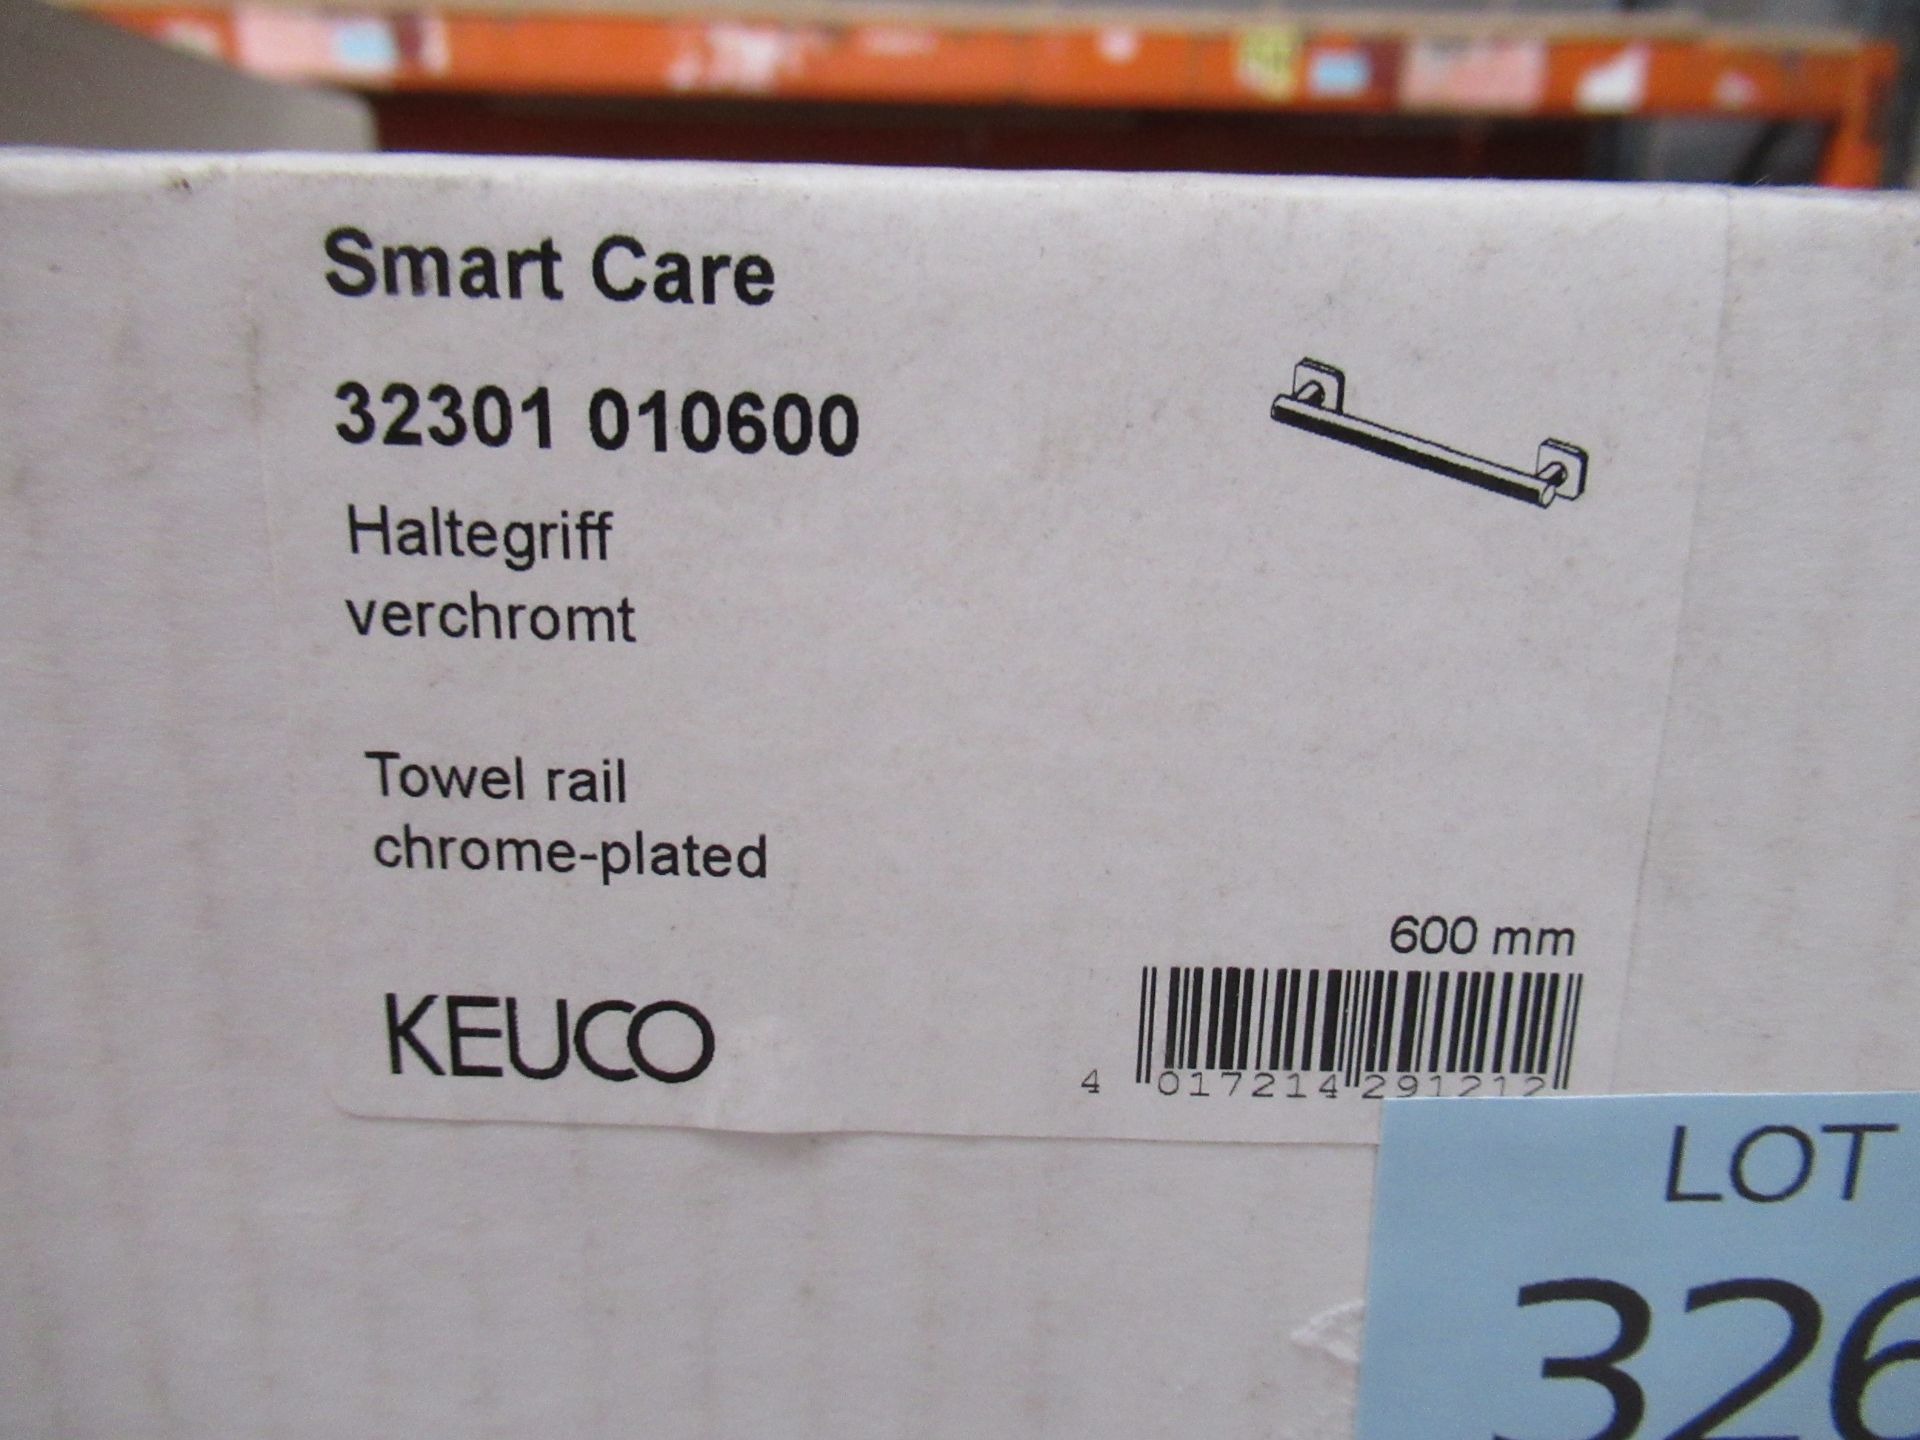 2 x Keuco Smart Care Towel Rails, Chrome Plated, P/N 32301-010600 - Image 2 of 2